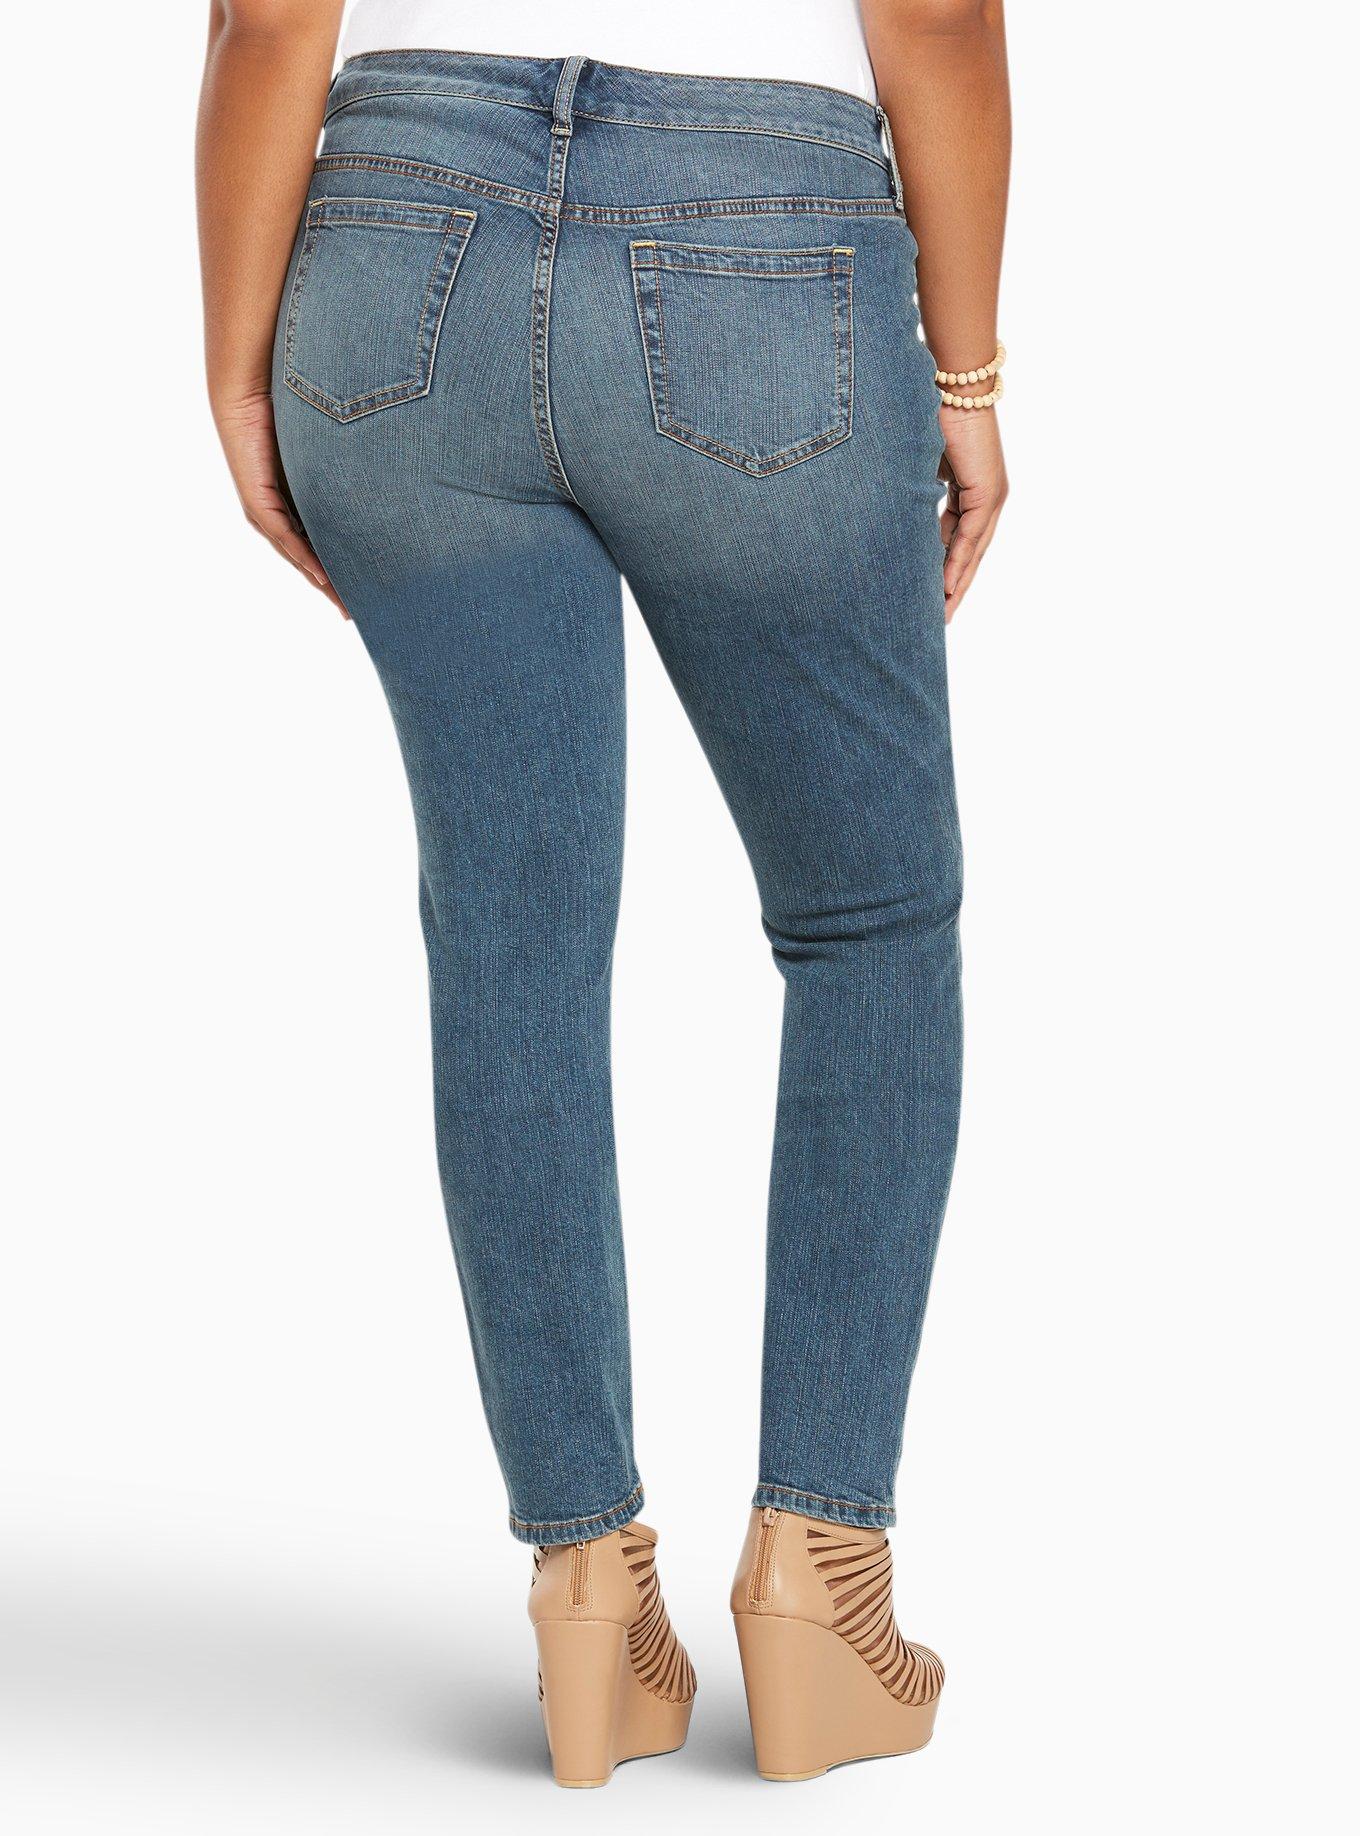 Plus Size - Torrid Skinny Jeans - Medium Wash - Torrid